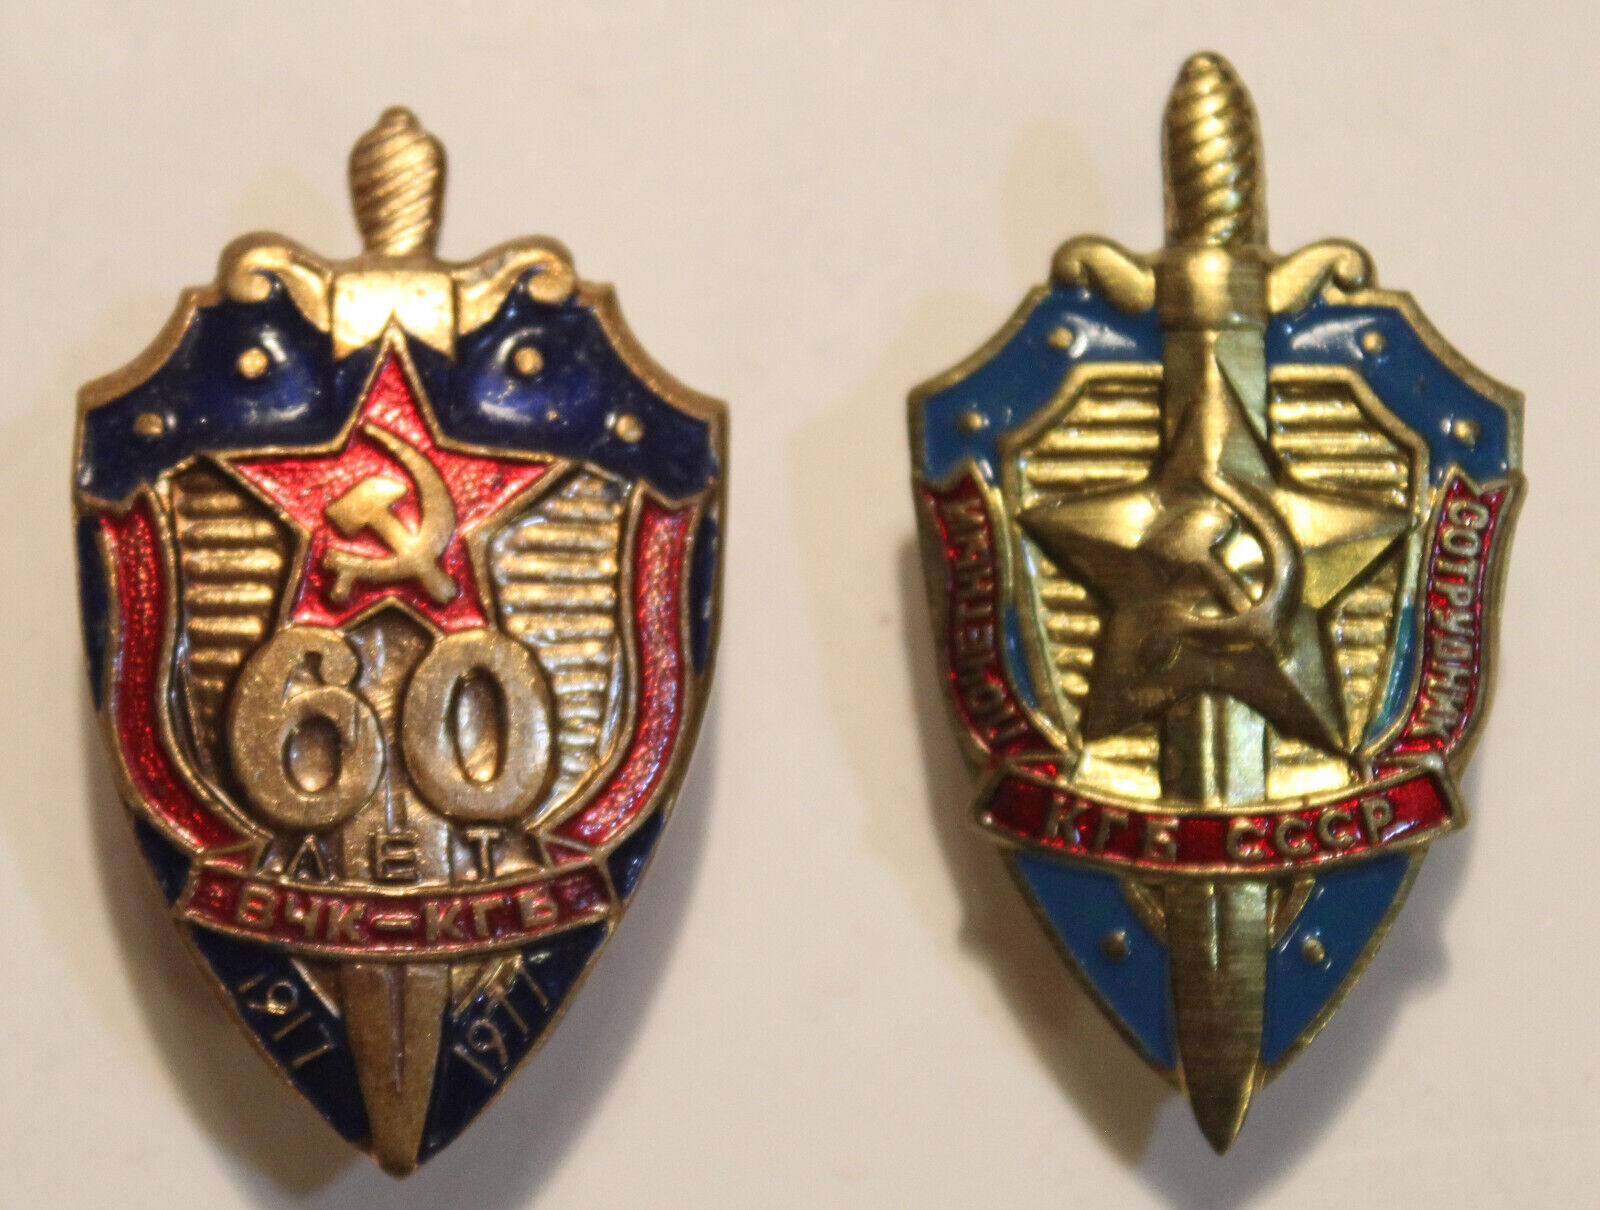 2 Reproduction Soviet Union Russia USSR KGB badges